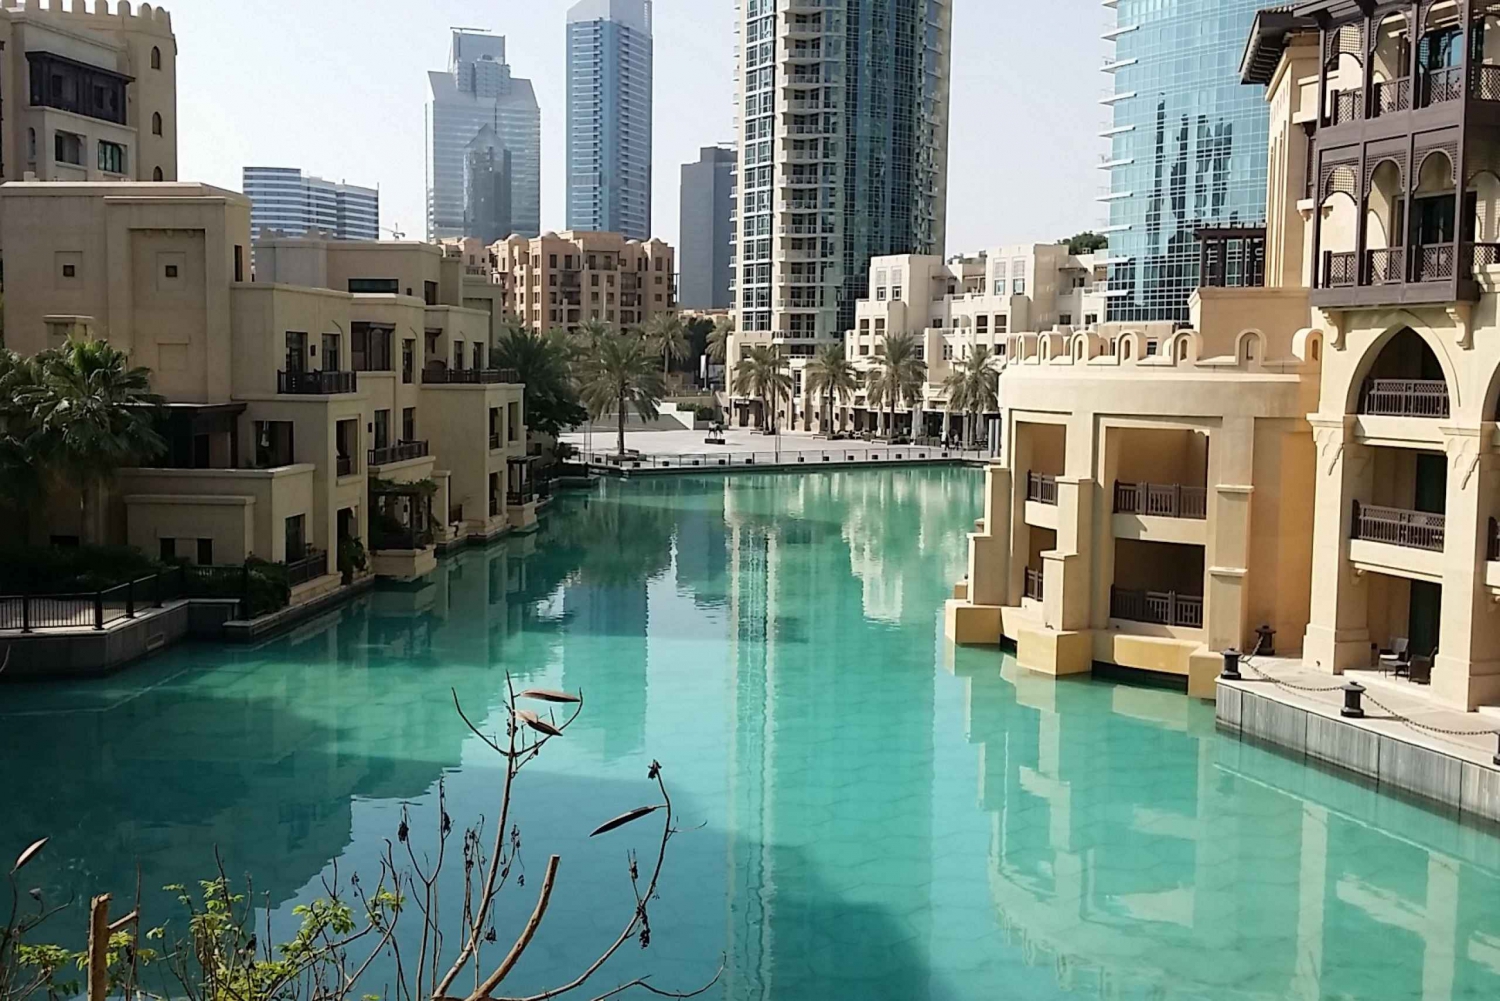 Dubai: Privat rundvisning med guide